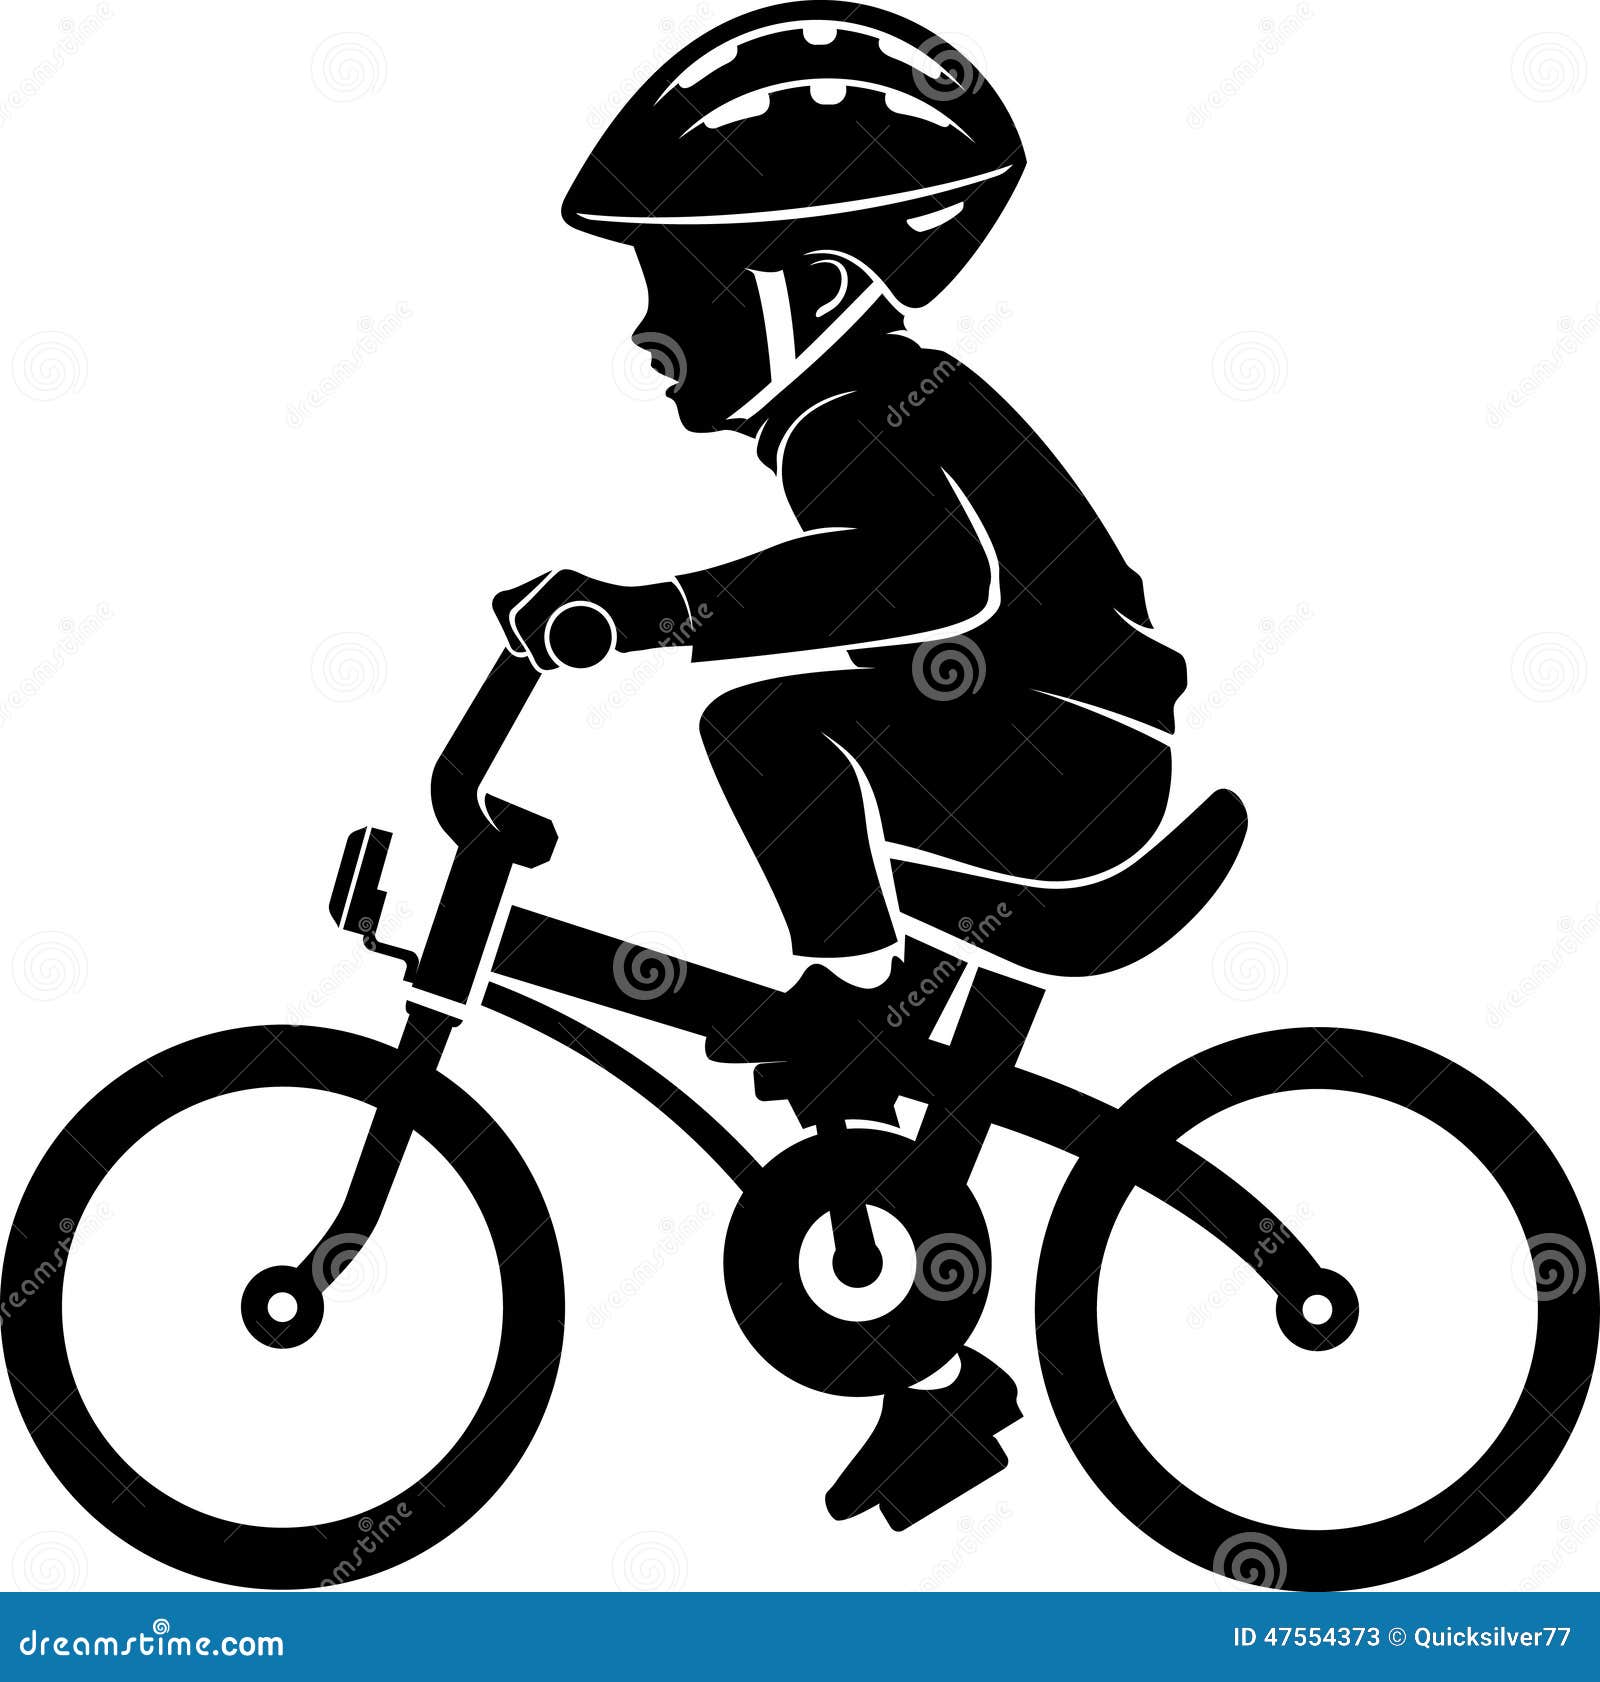 boy riding bike clipart - photo #37